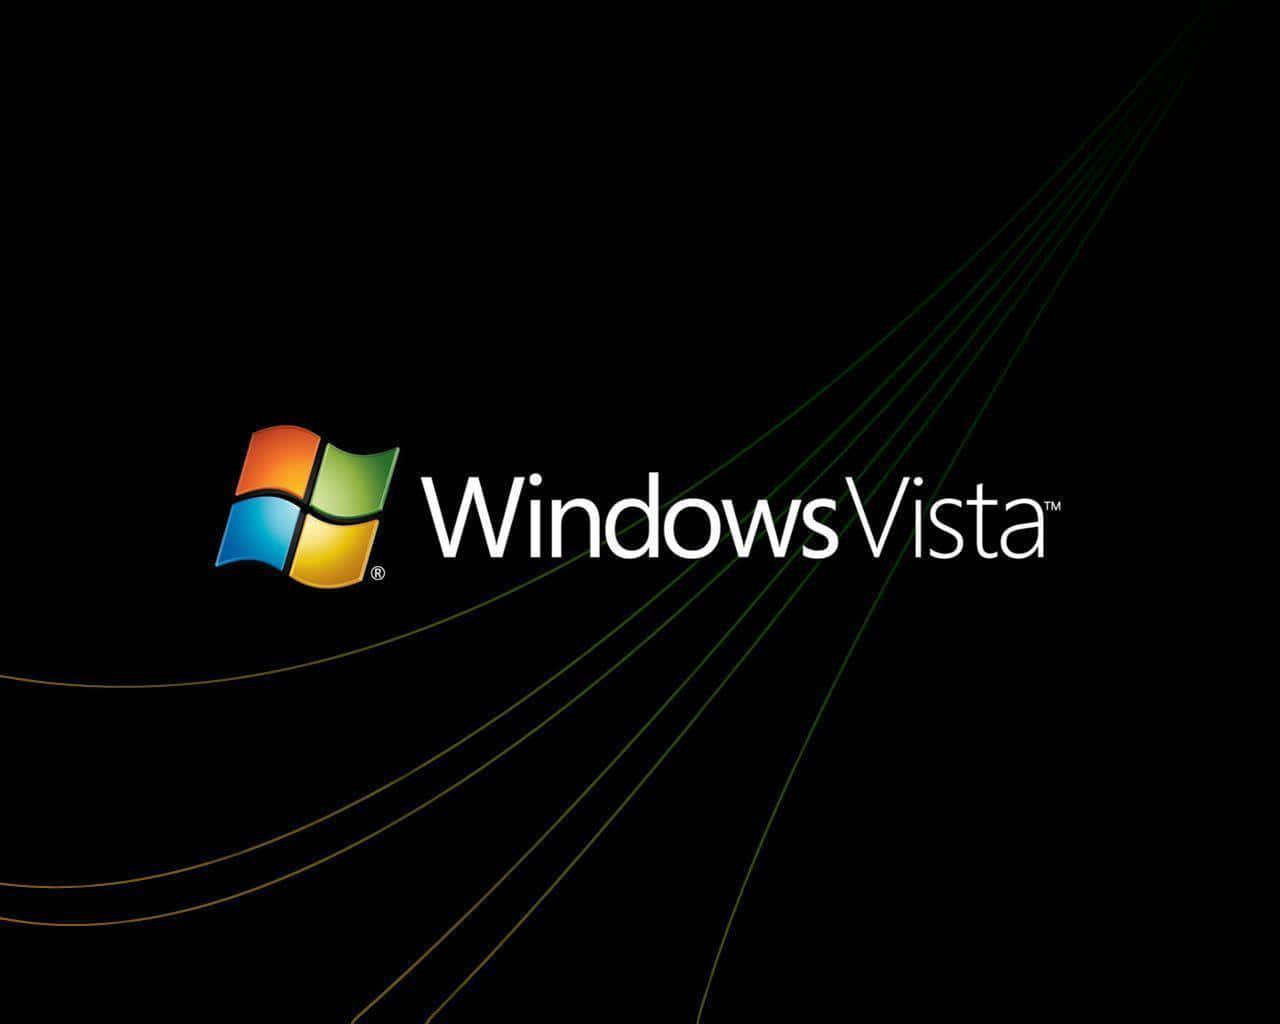 Windowsvista - Bredt Anvendt Operativsystem